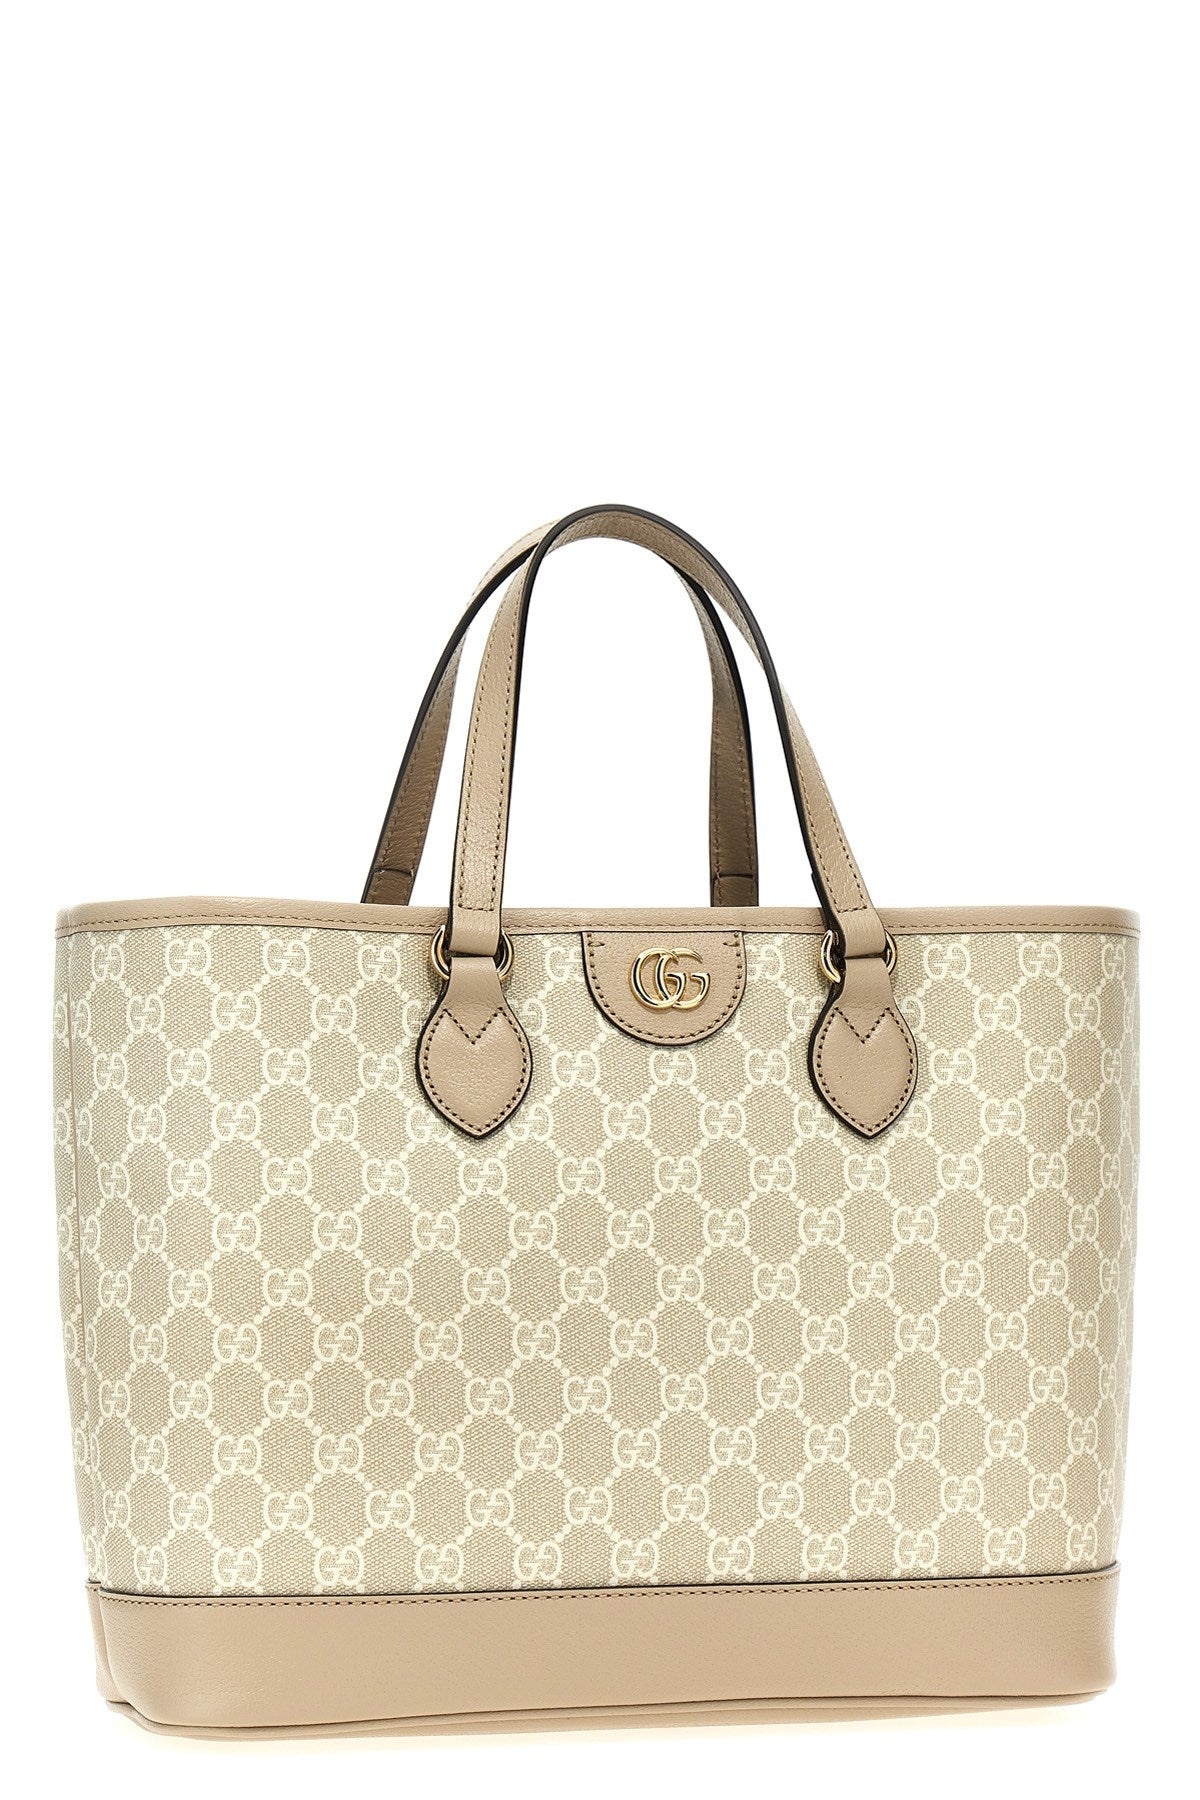 Gucci Women 'Ophidia' Small Shopping Bag - 3